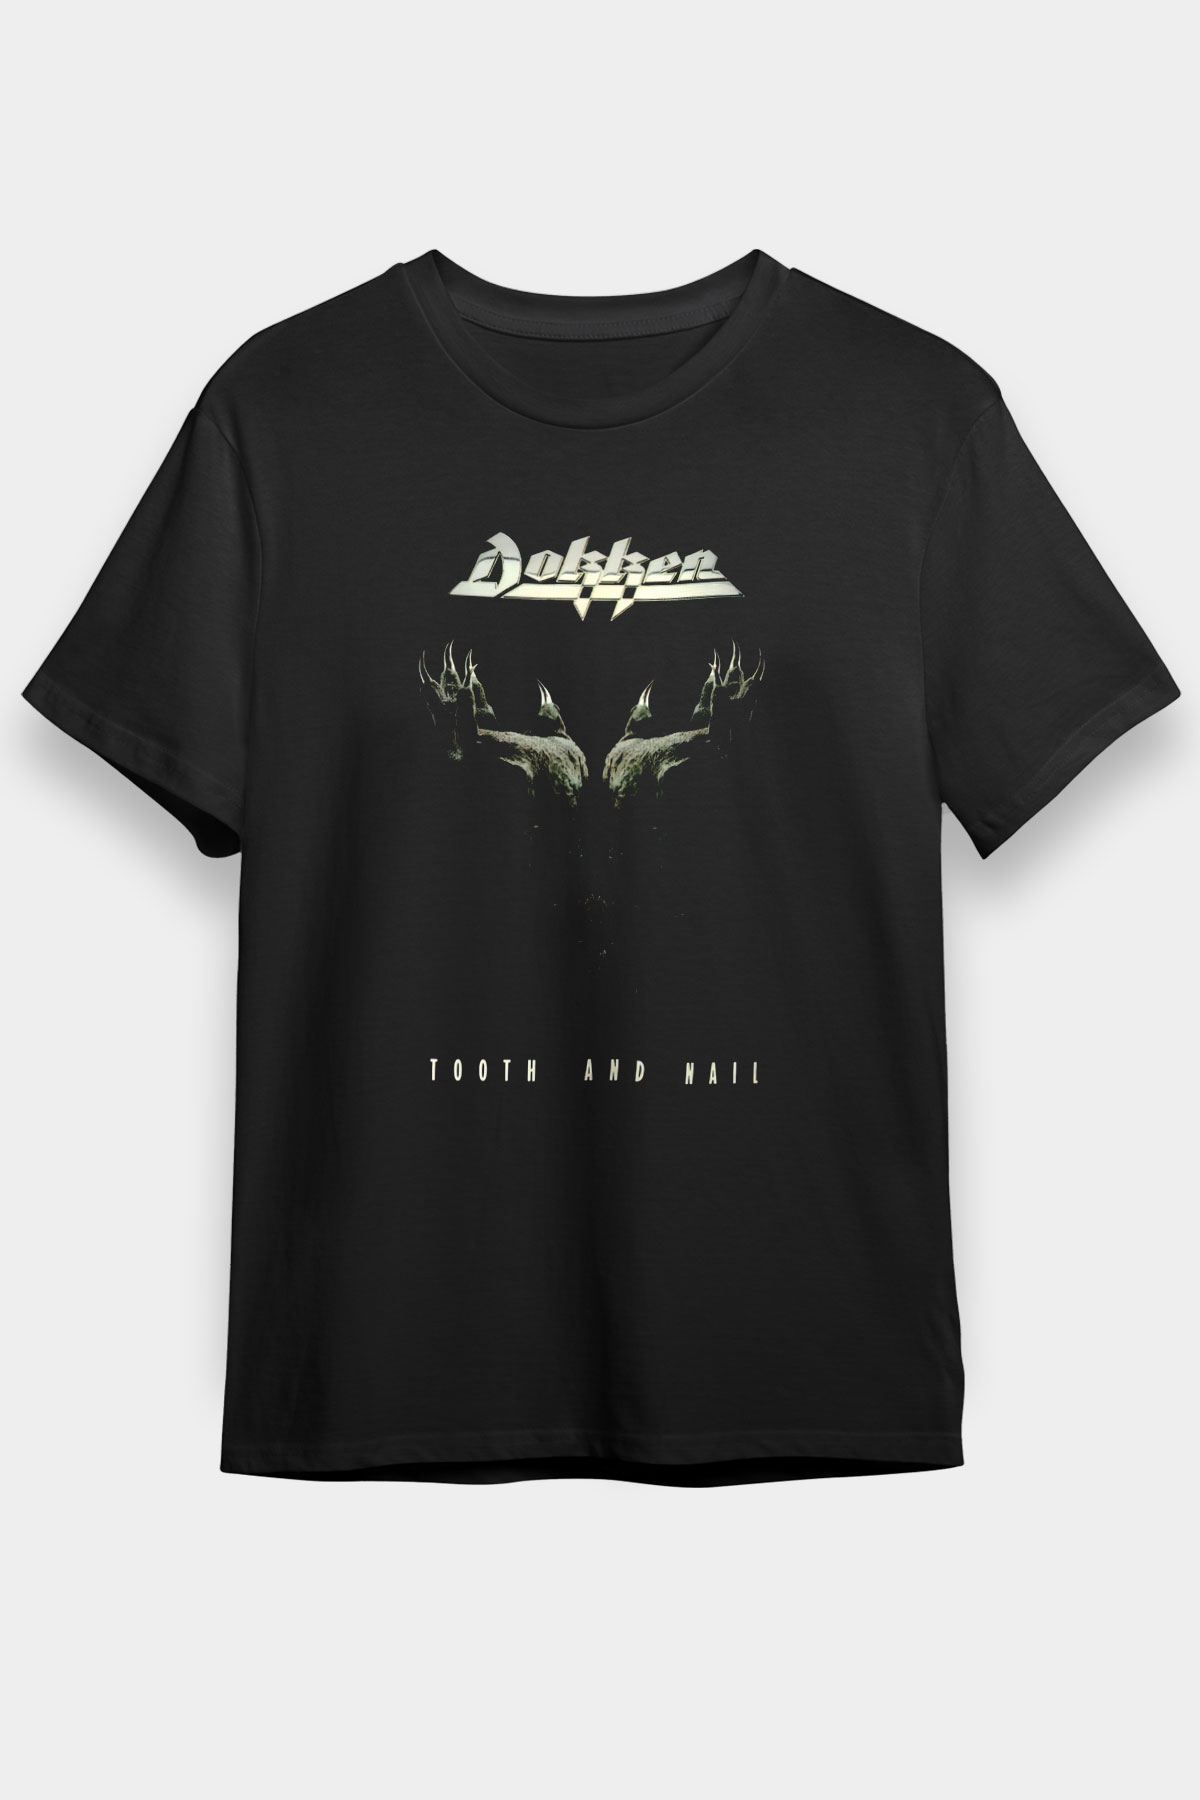 Dokken  T shirt,Music Band,Unisex Tshirt 21/